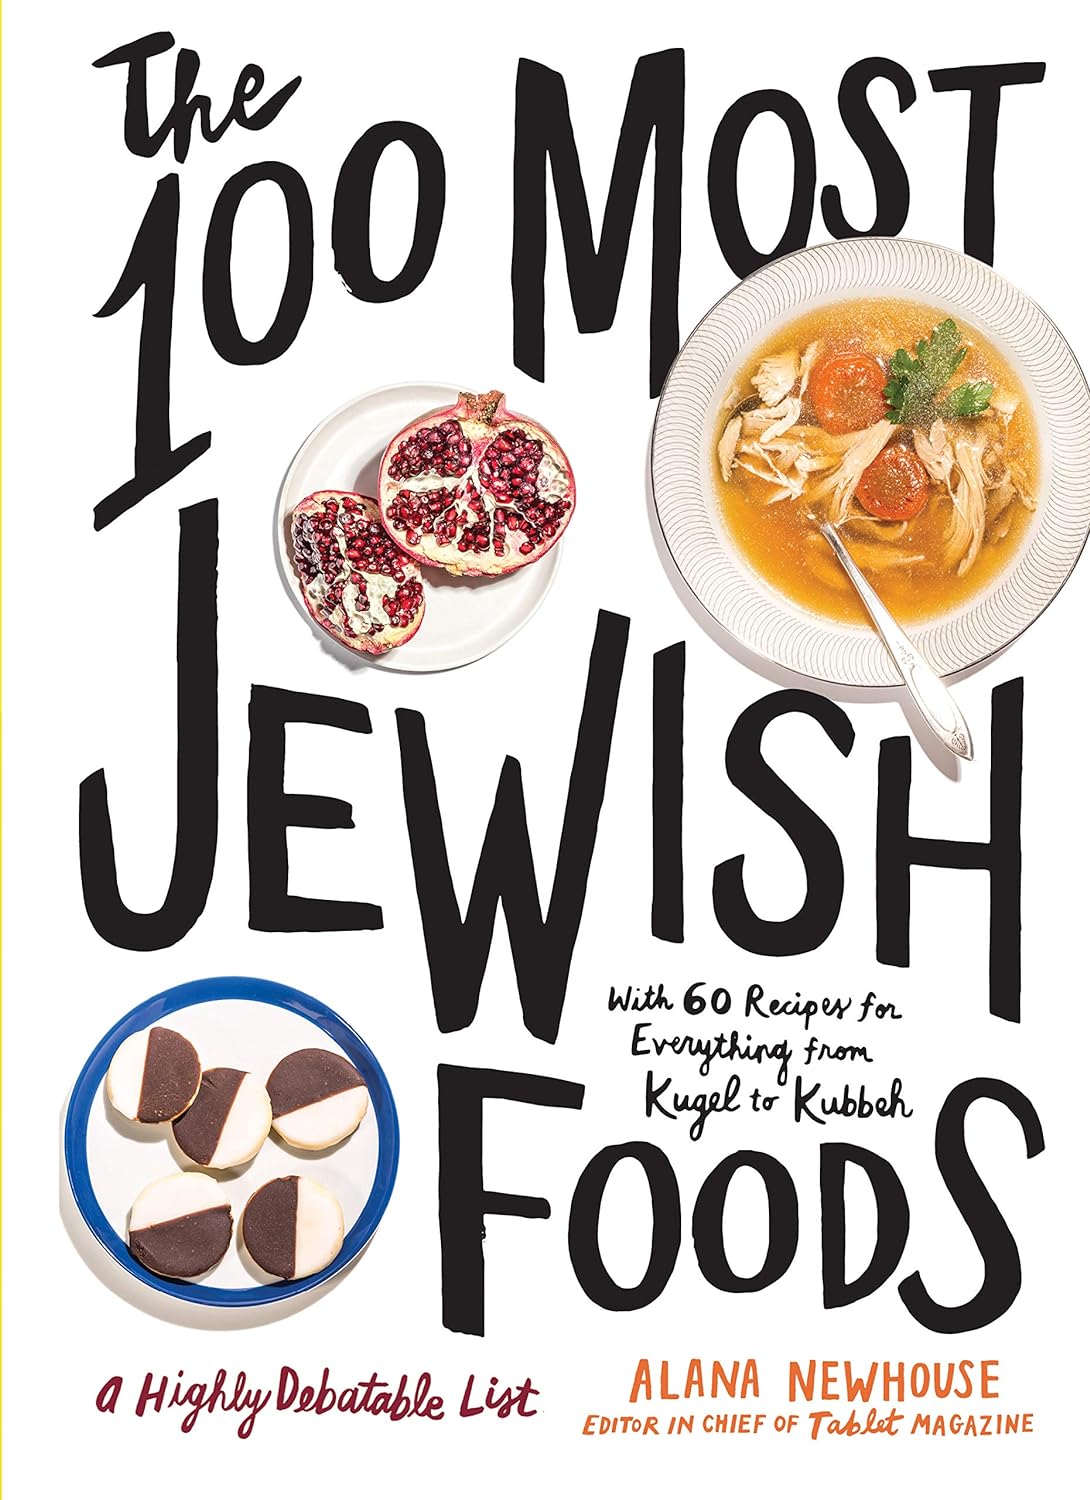 The 100 Most Jewish Foods Cookbook